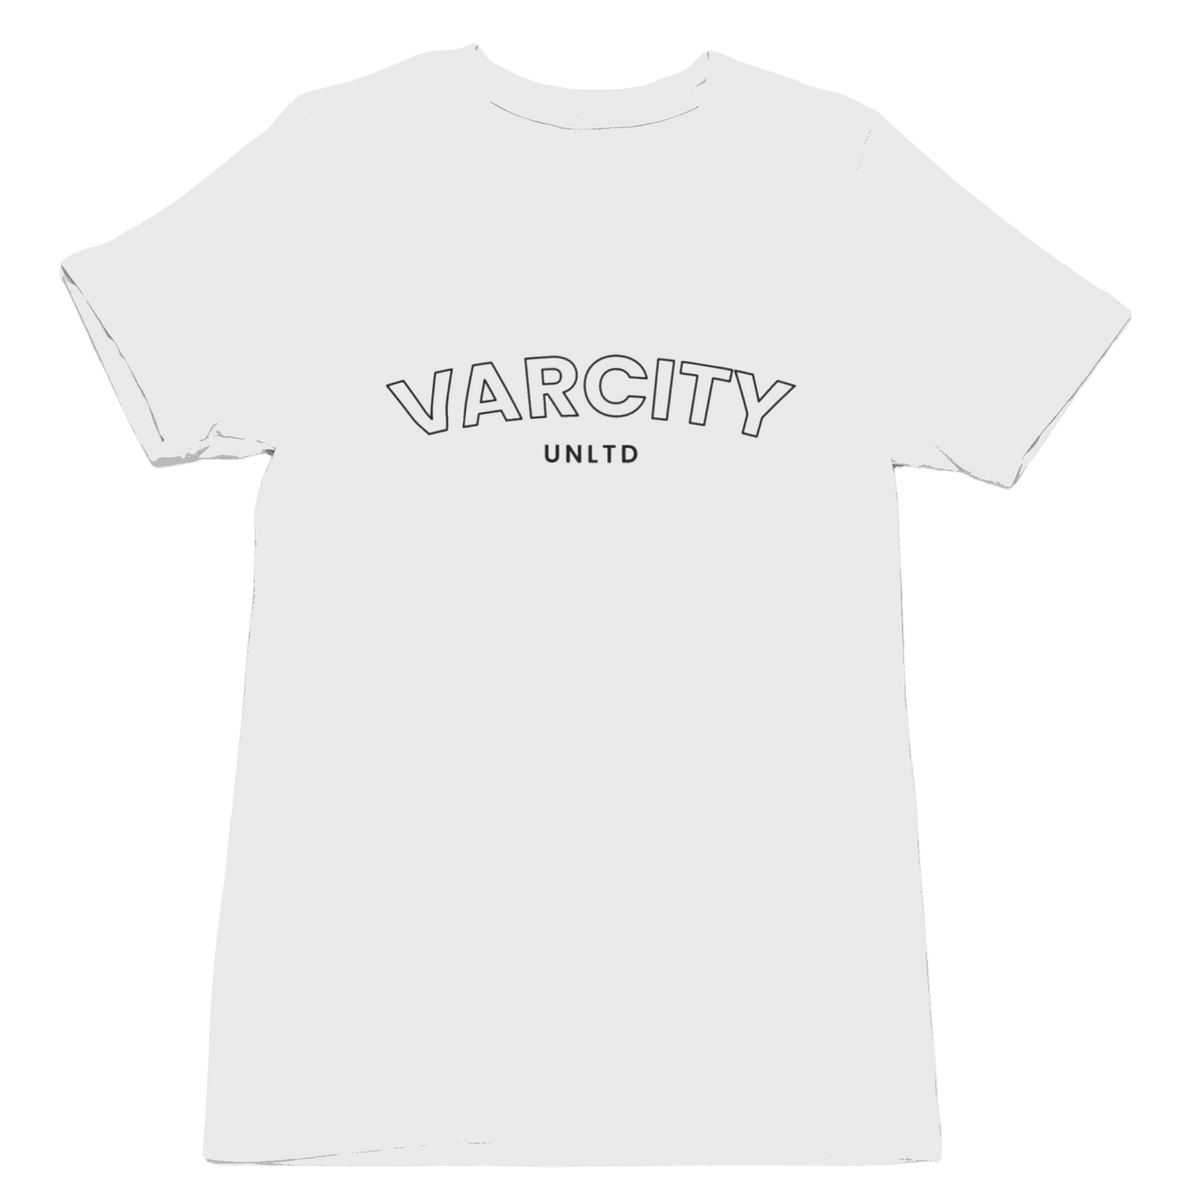 Varcity Unltd ® Crescent Logo Tee